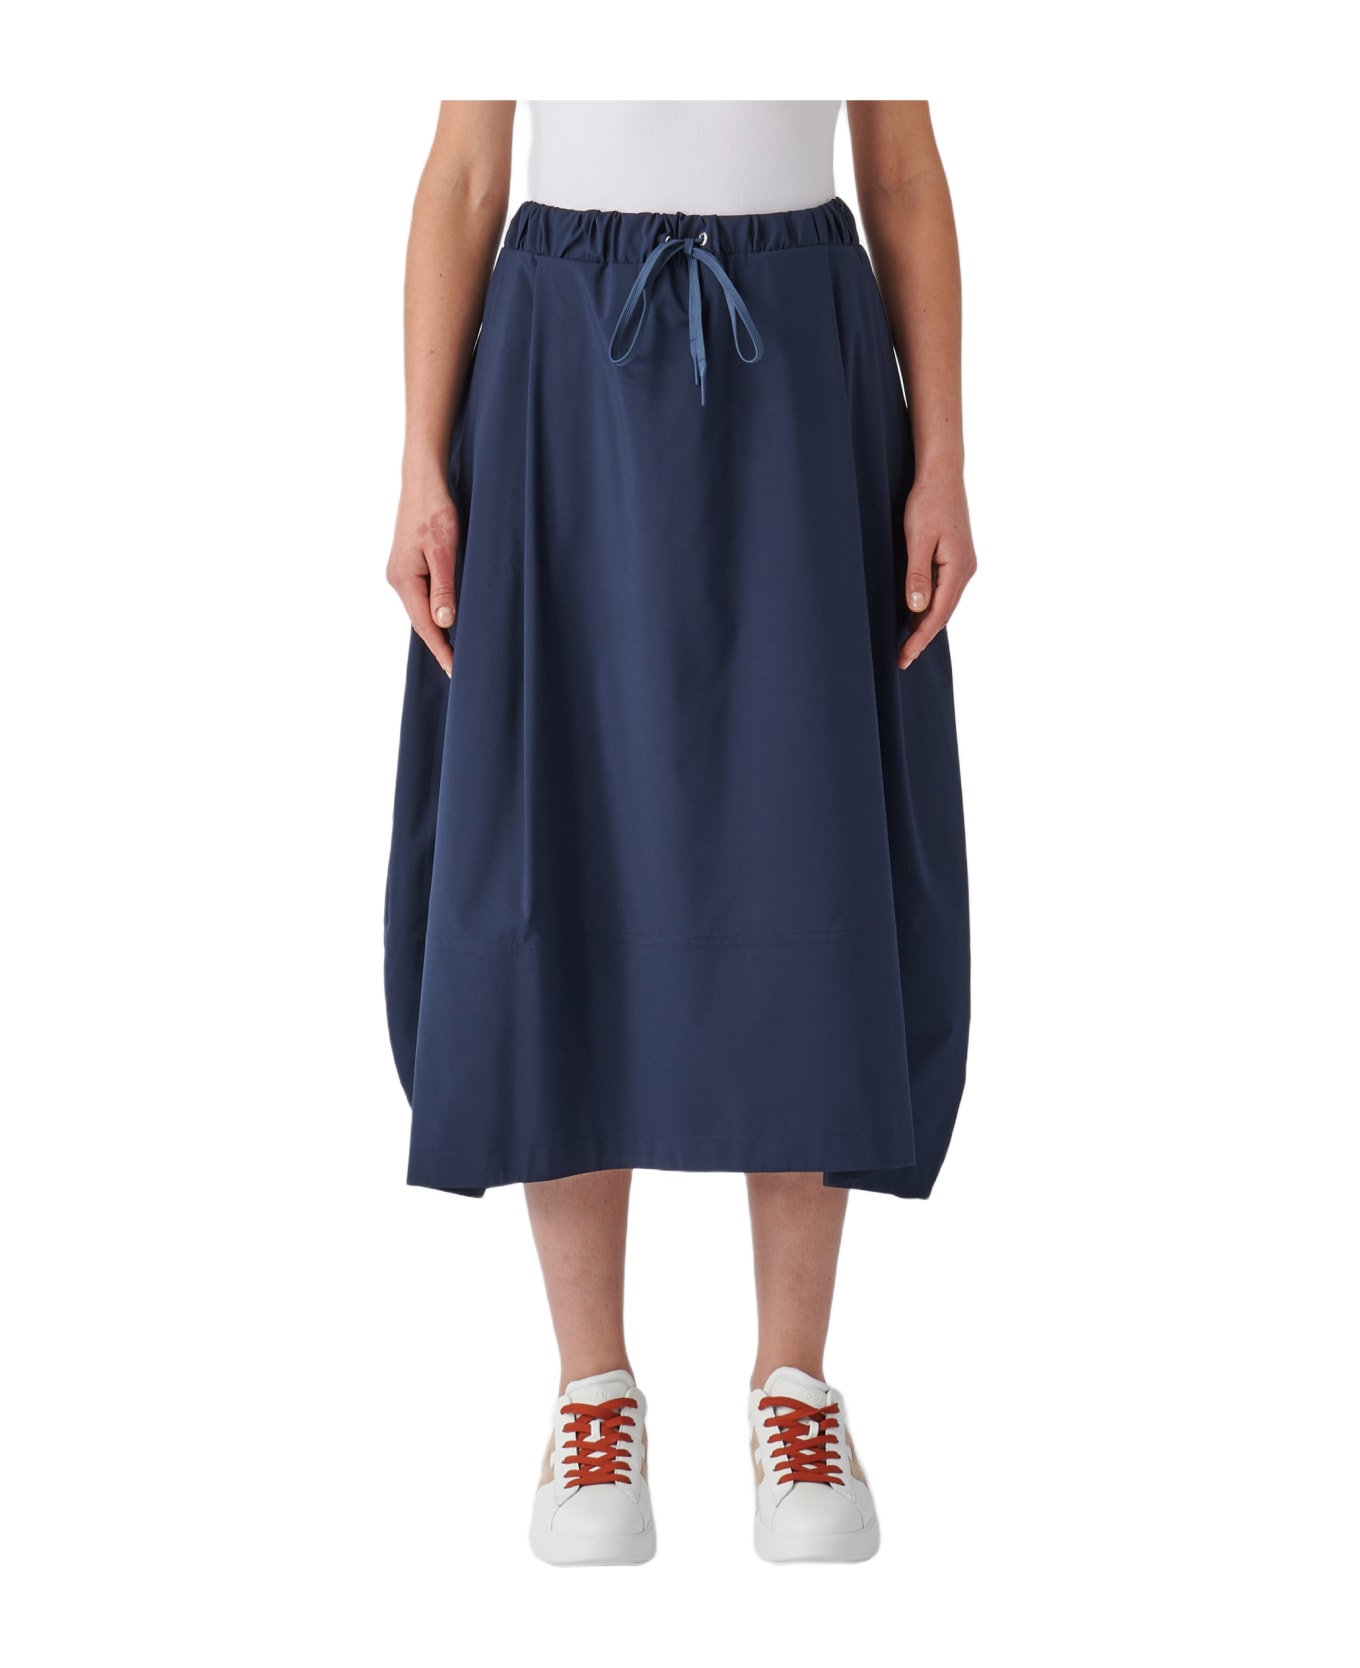 Gran Sasso Poliester Skirt - NAVY スカート